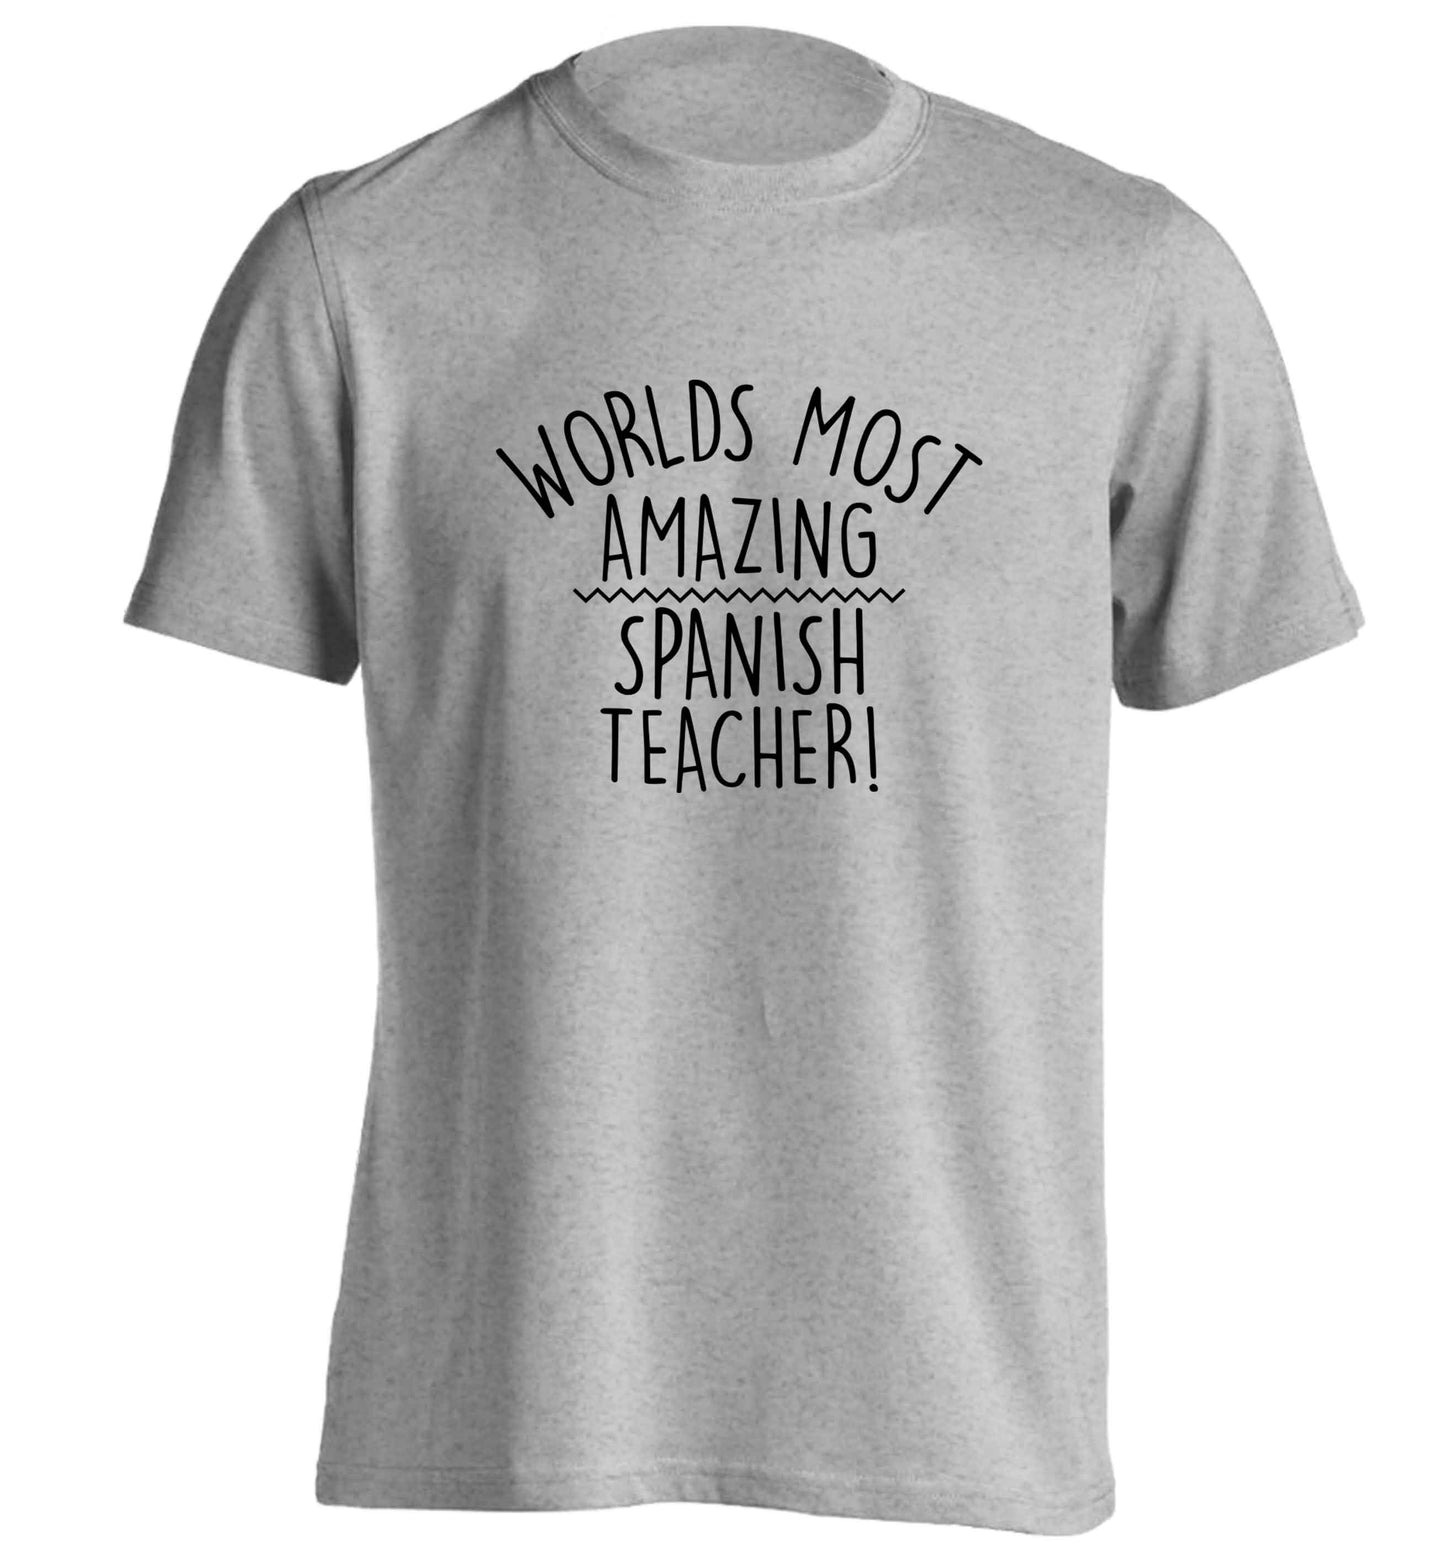 Worlds most amazing Spanish teacher adults unisex grey Tshirt 2XL